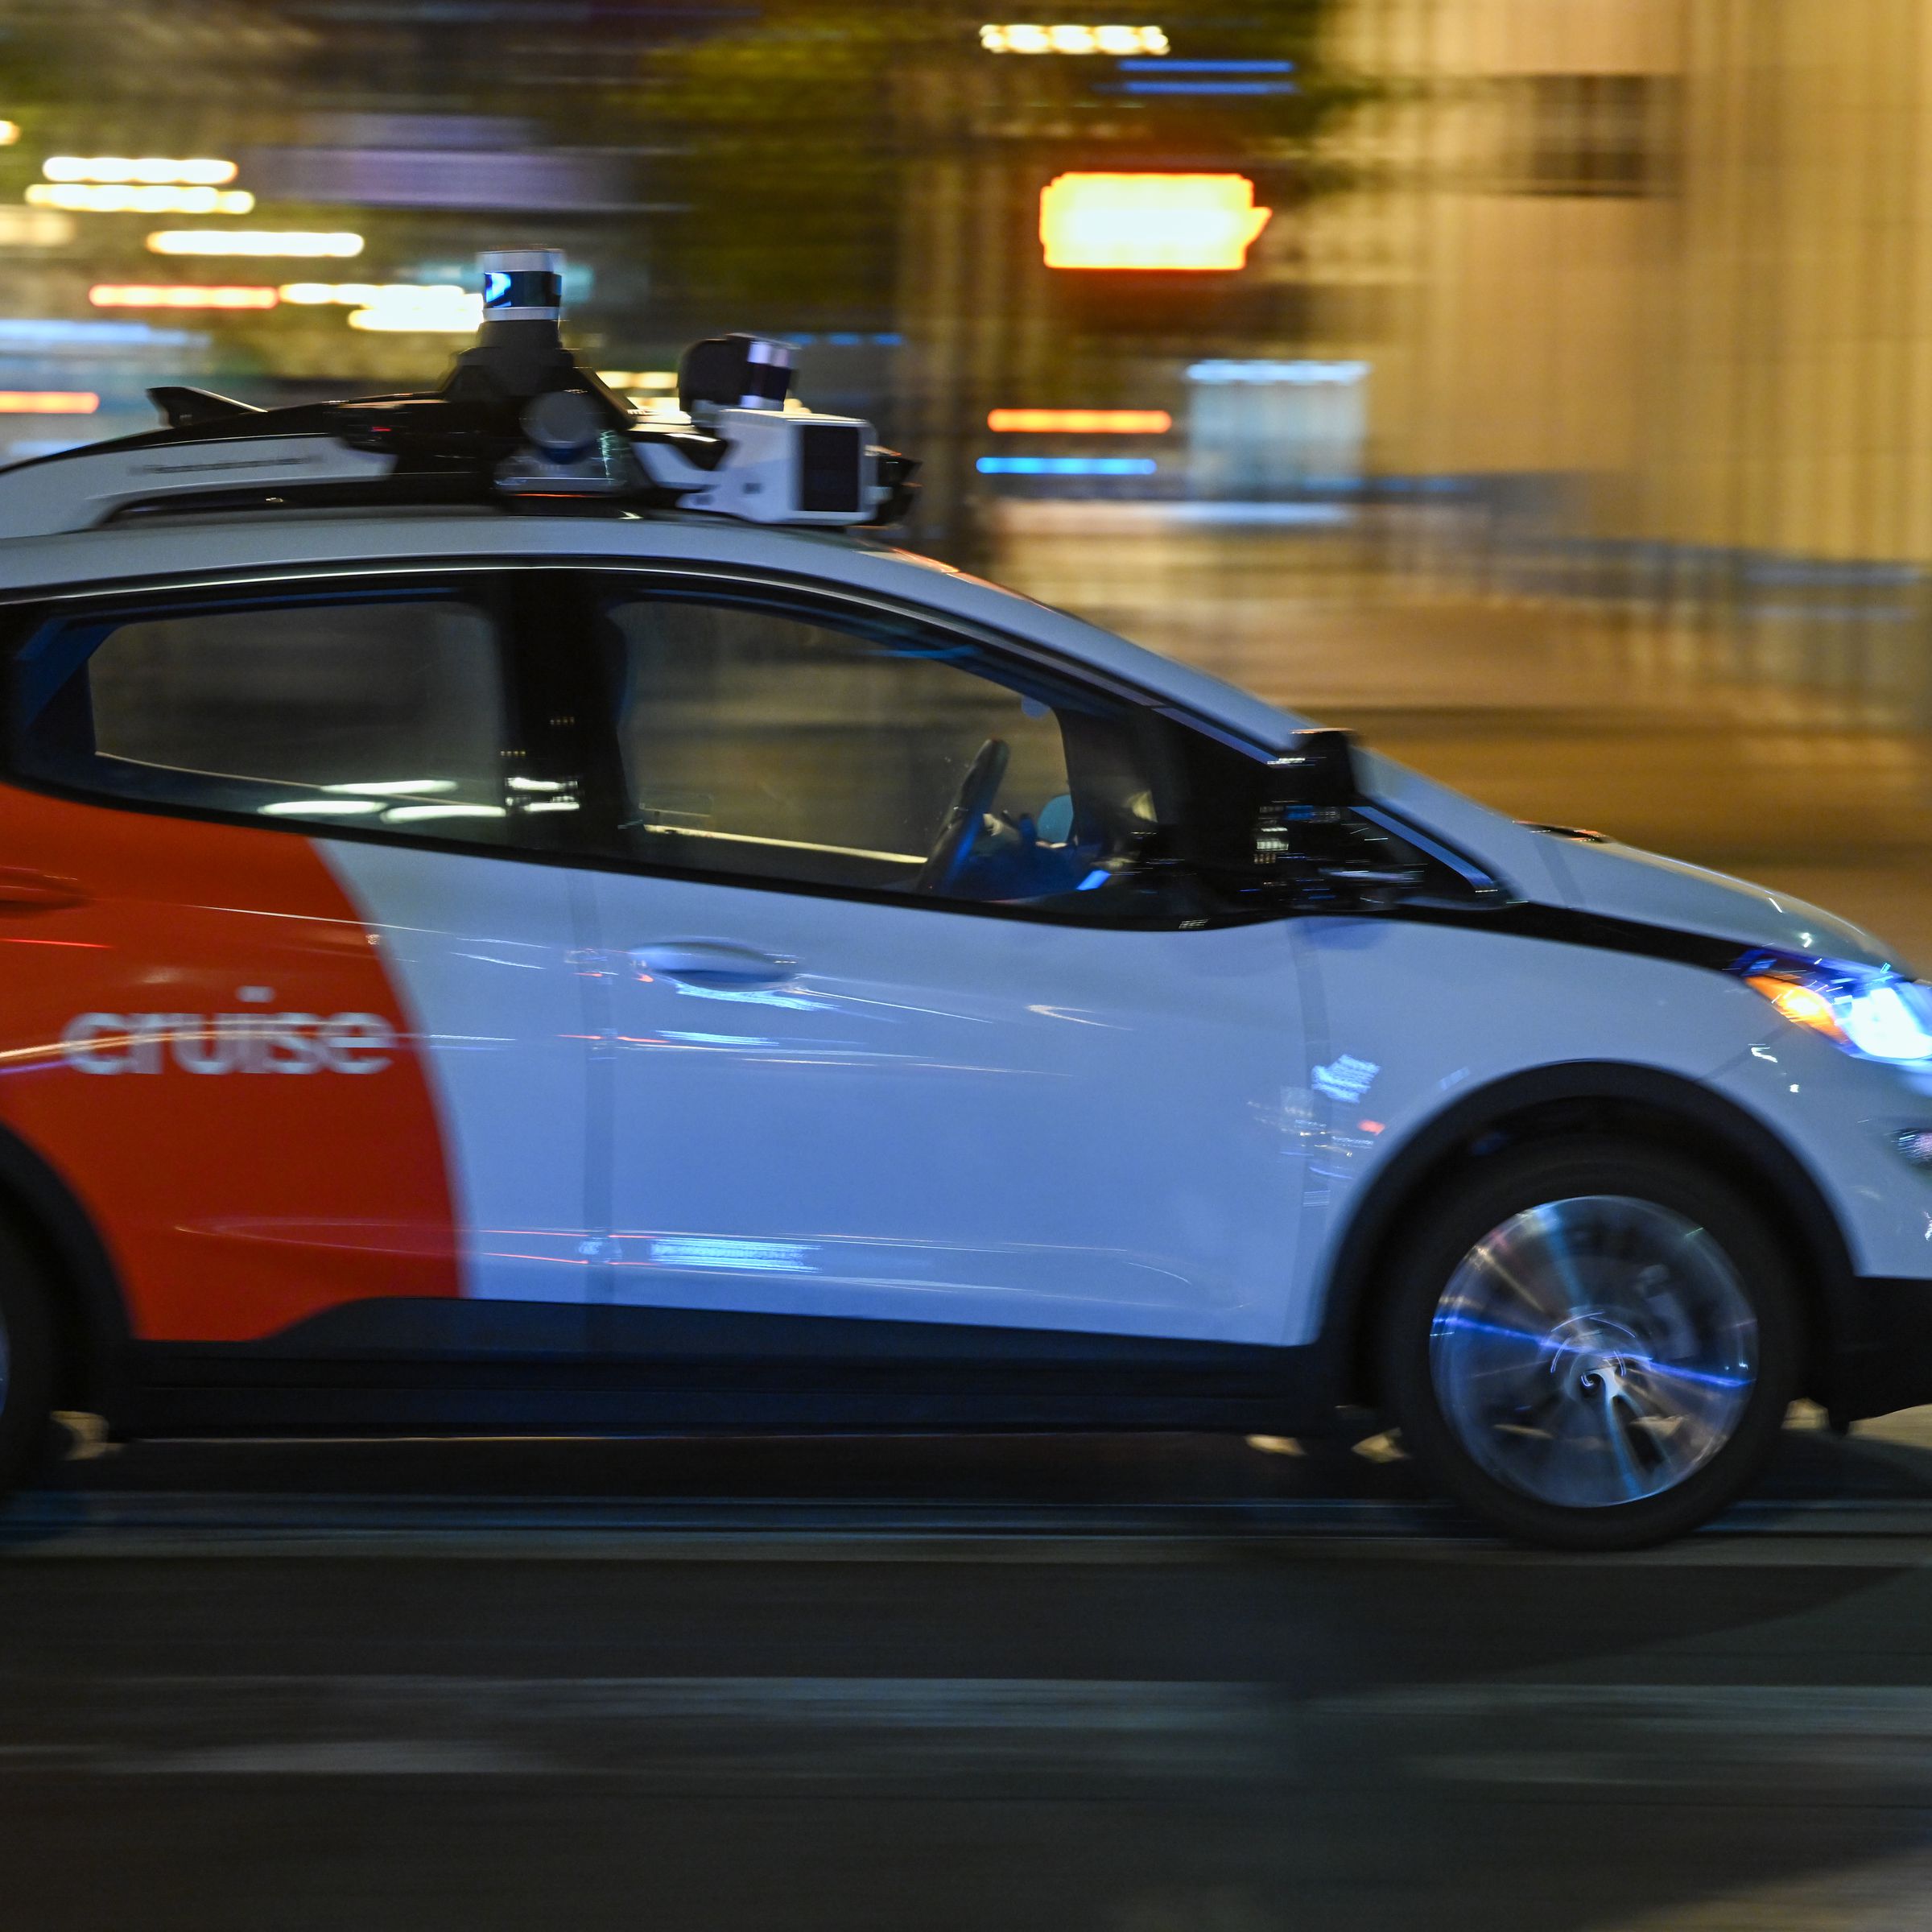 Cruise driverless robot taxi in San Francisco